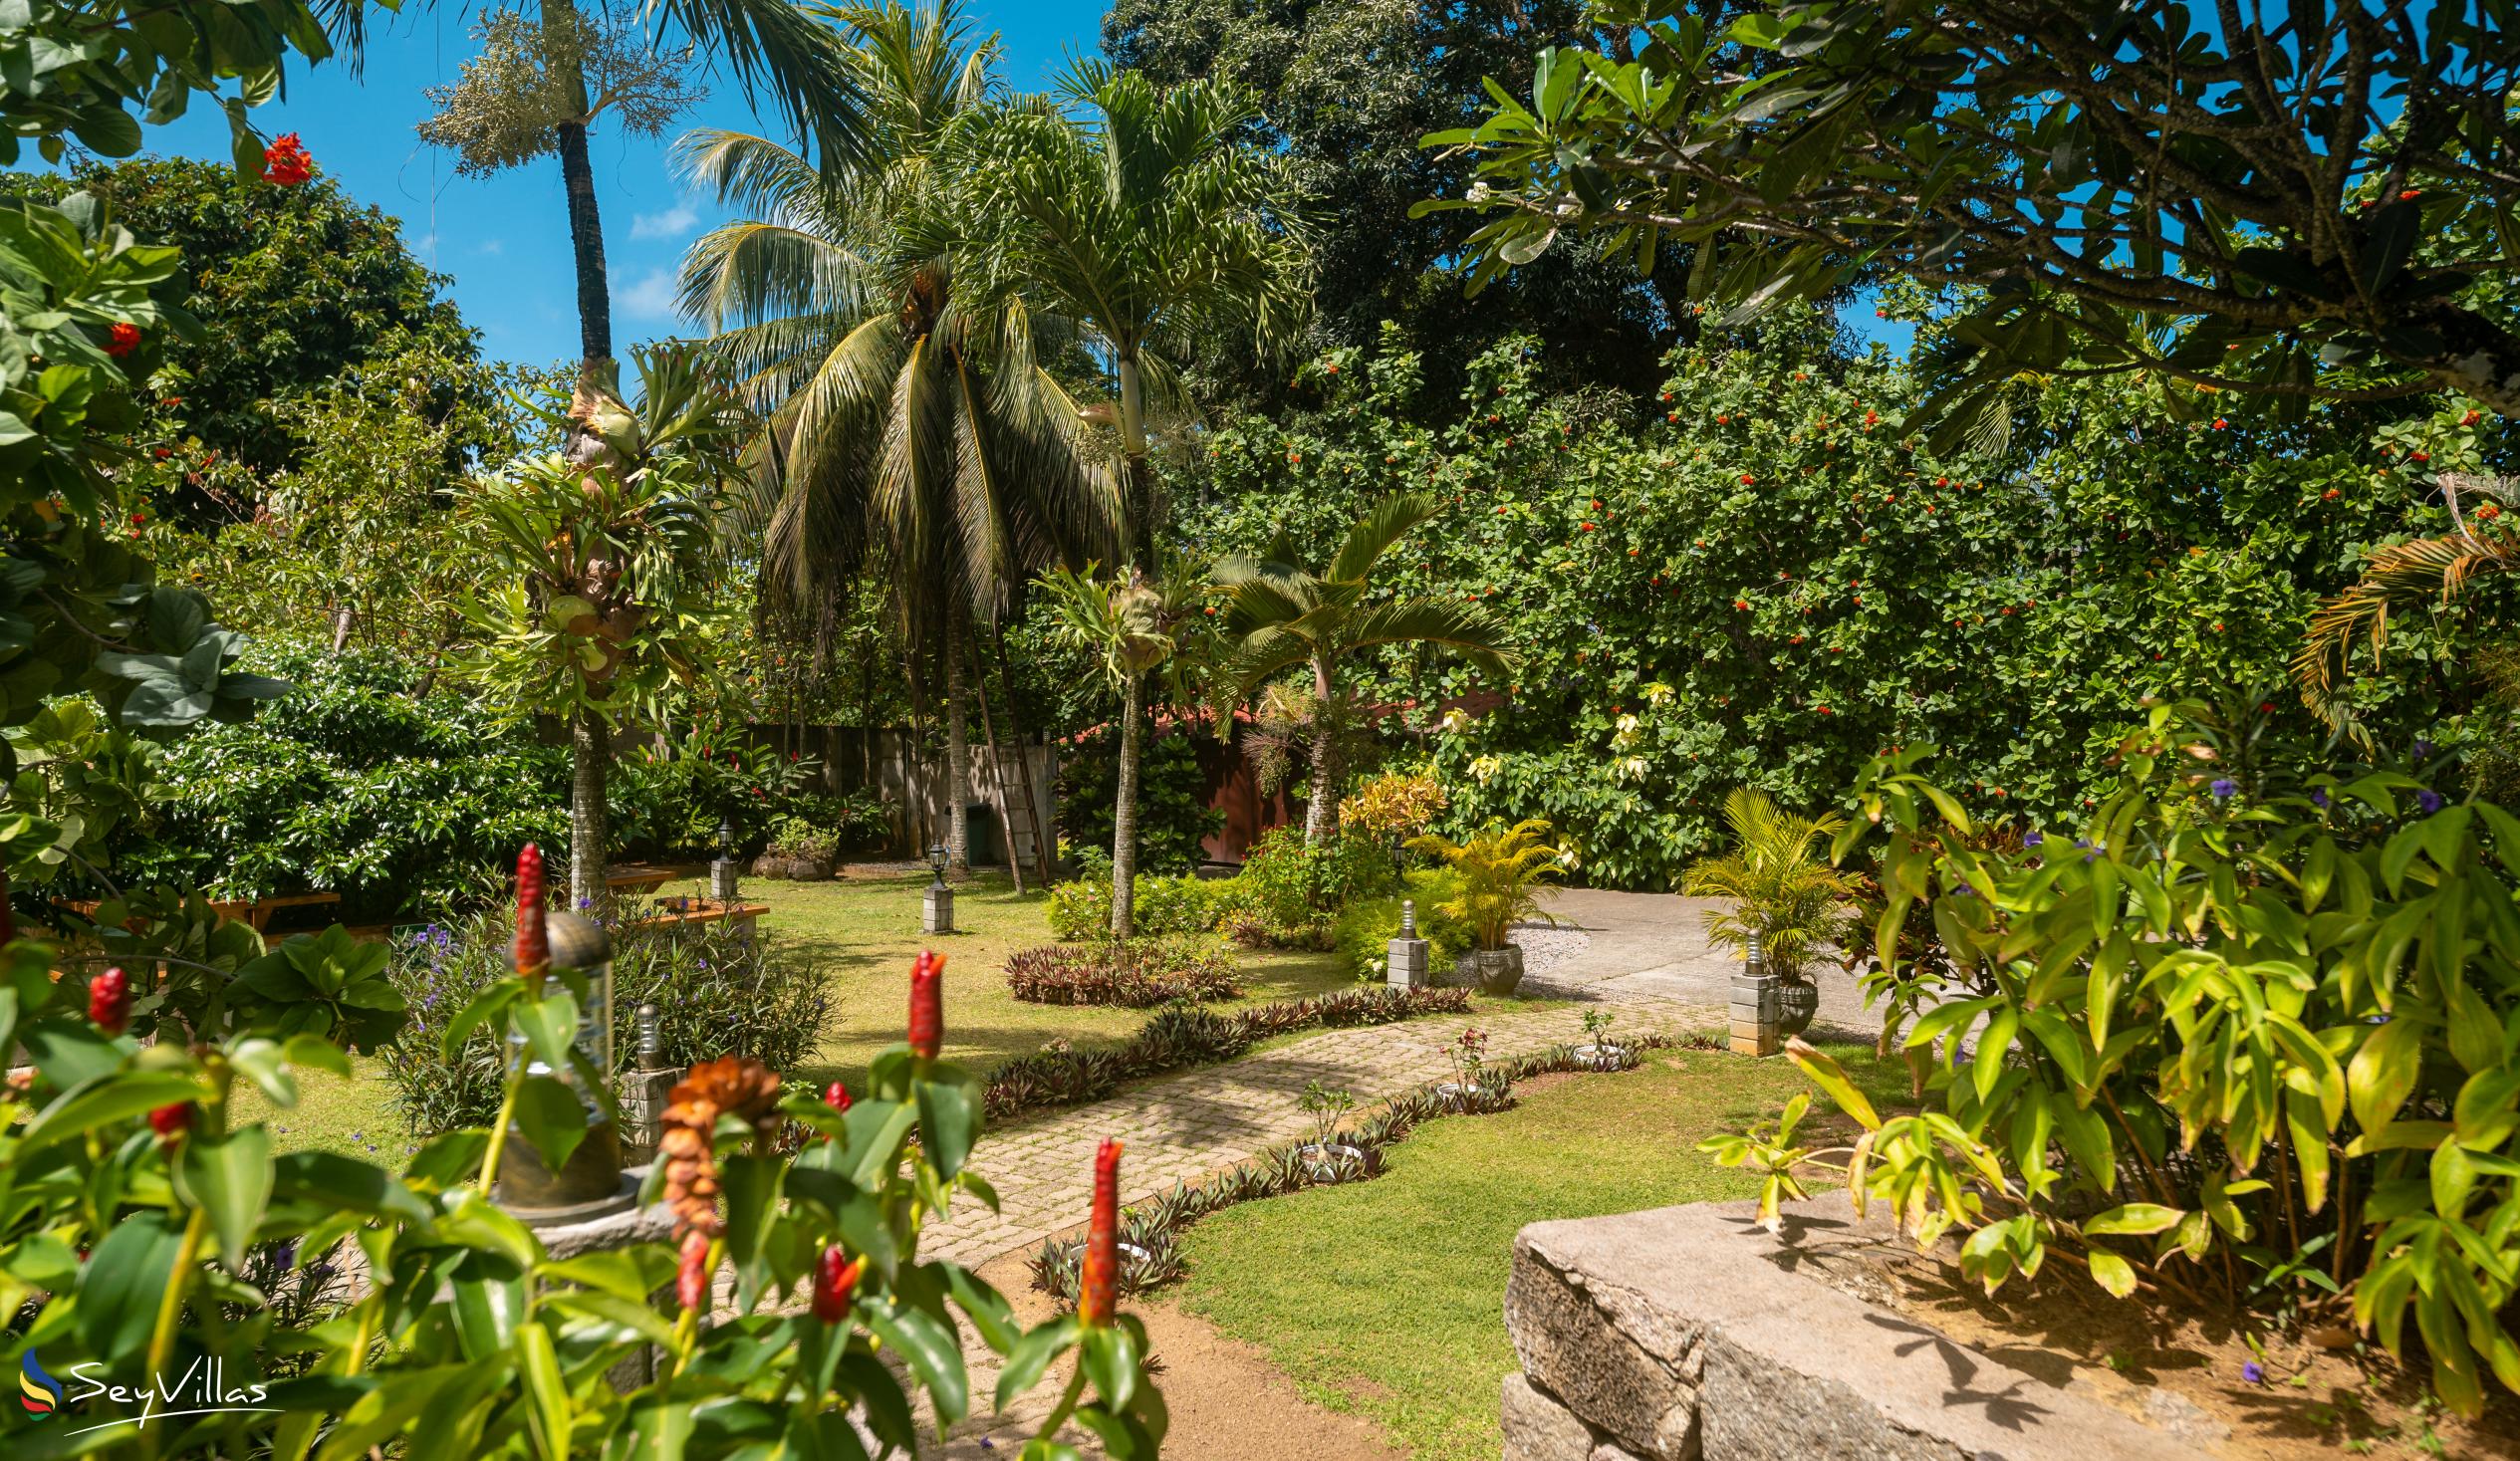 Photo 18: Villa Kordia - Outdoor area - Mahé (Seychelles)